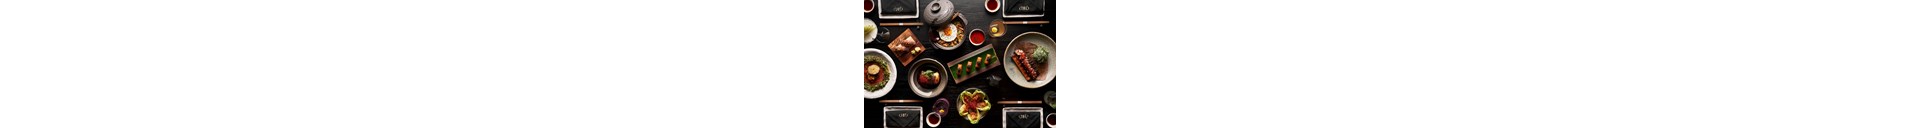 OKKU Dubai - Perfect Fine Dining Japanese Sharing 